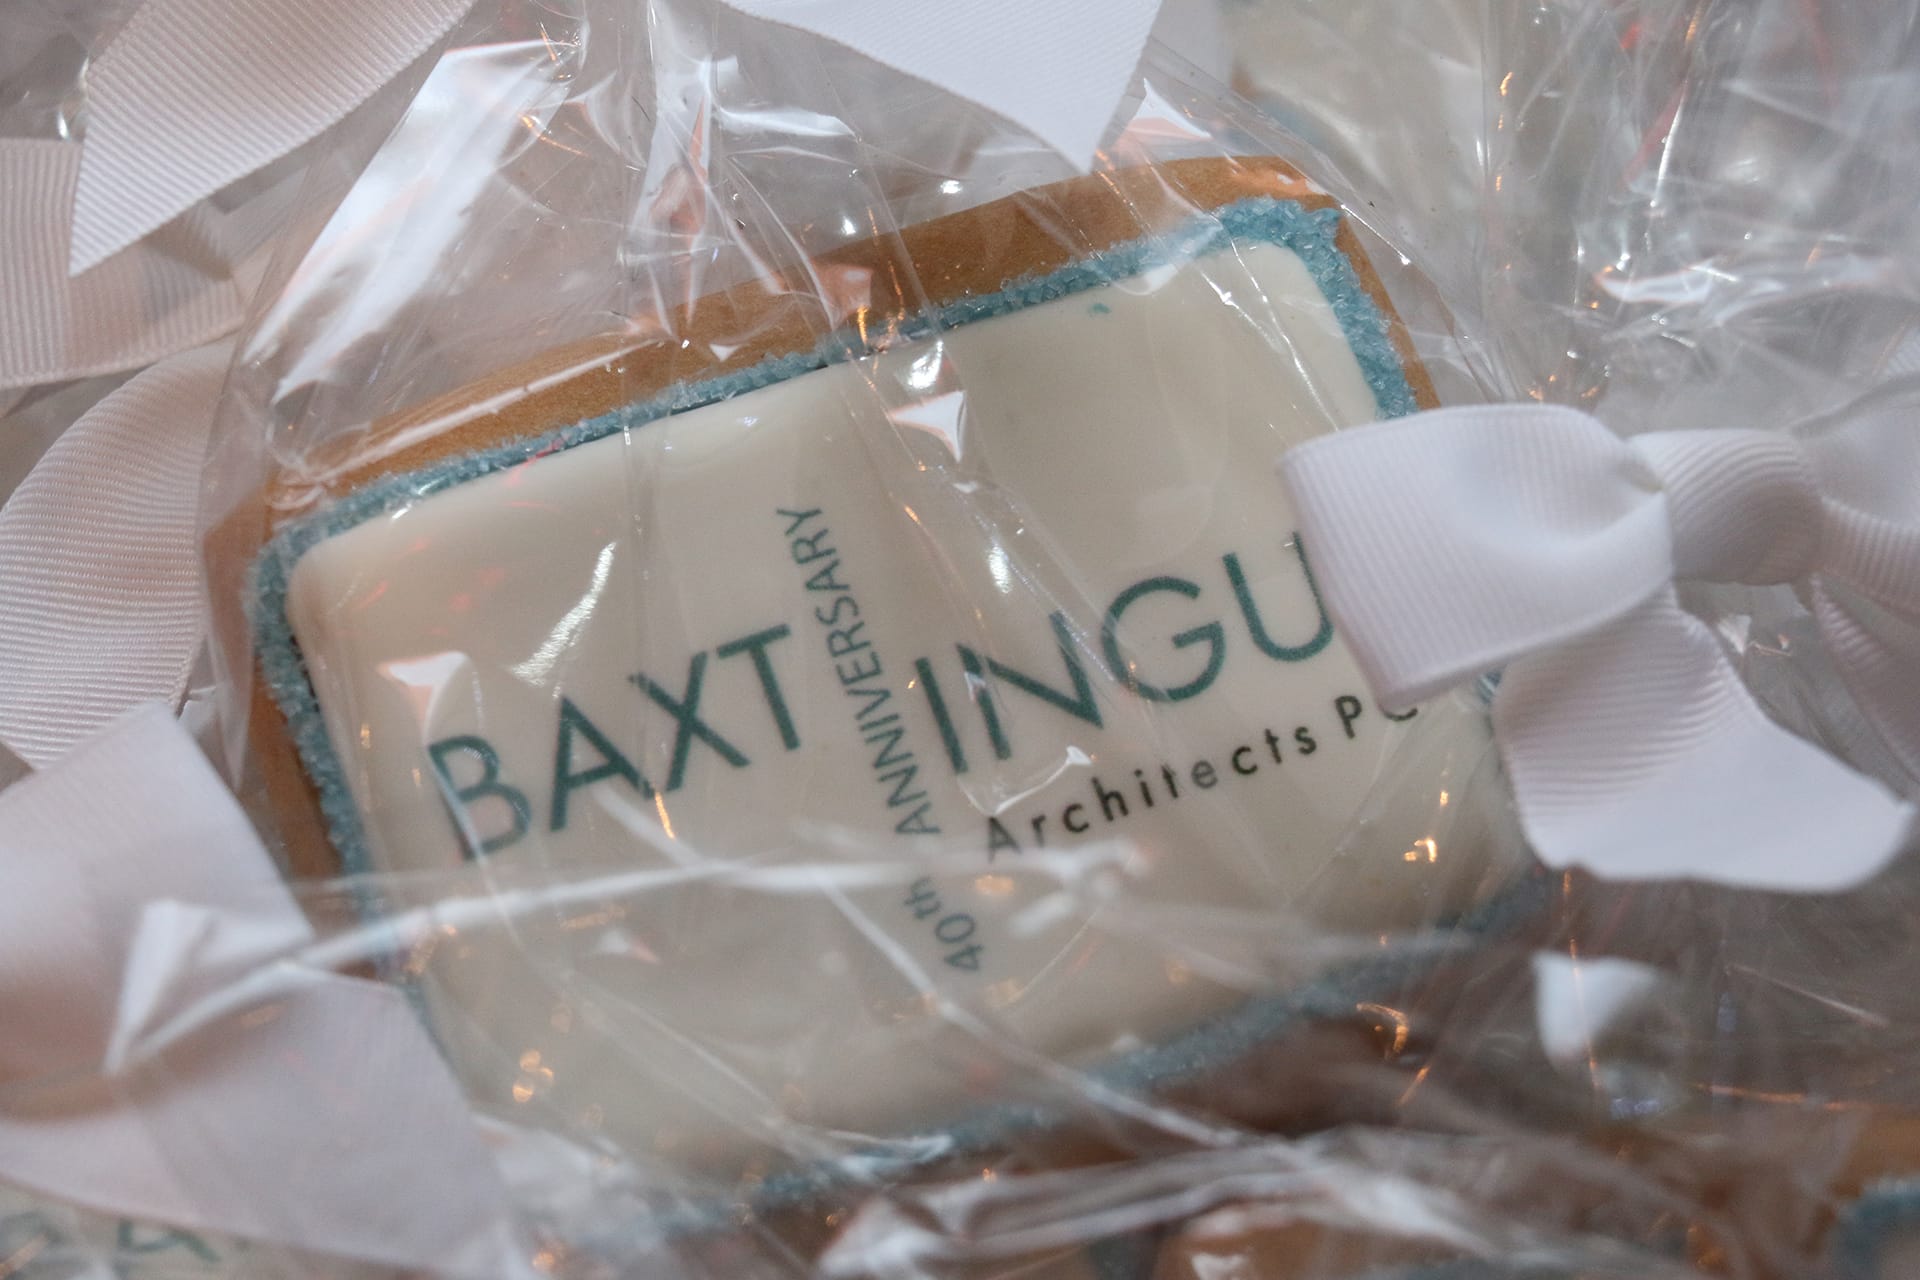 Baxt Ingui 40th Anniversary cookie